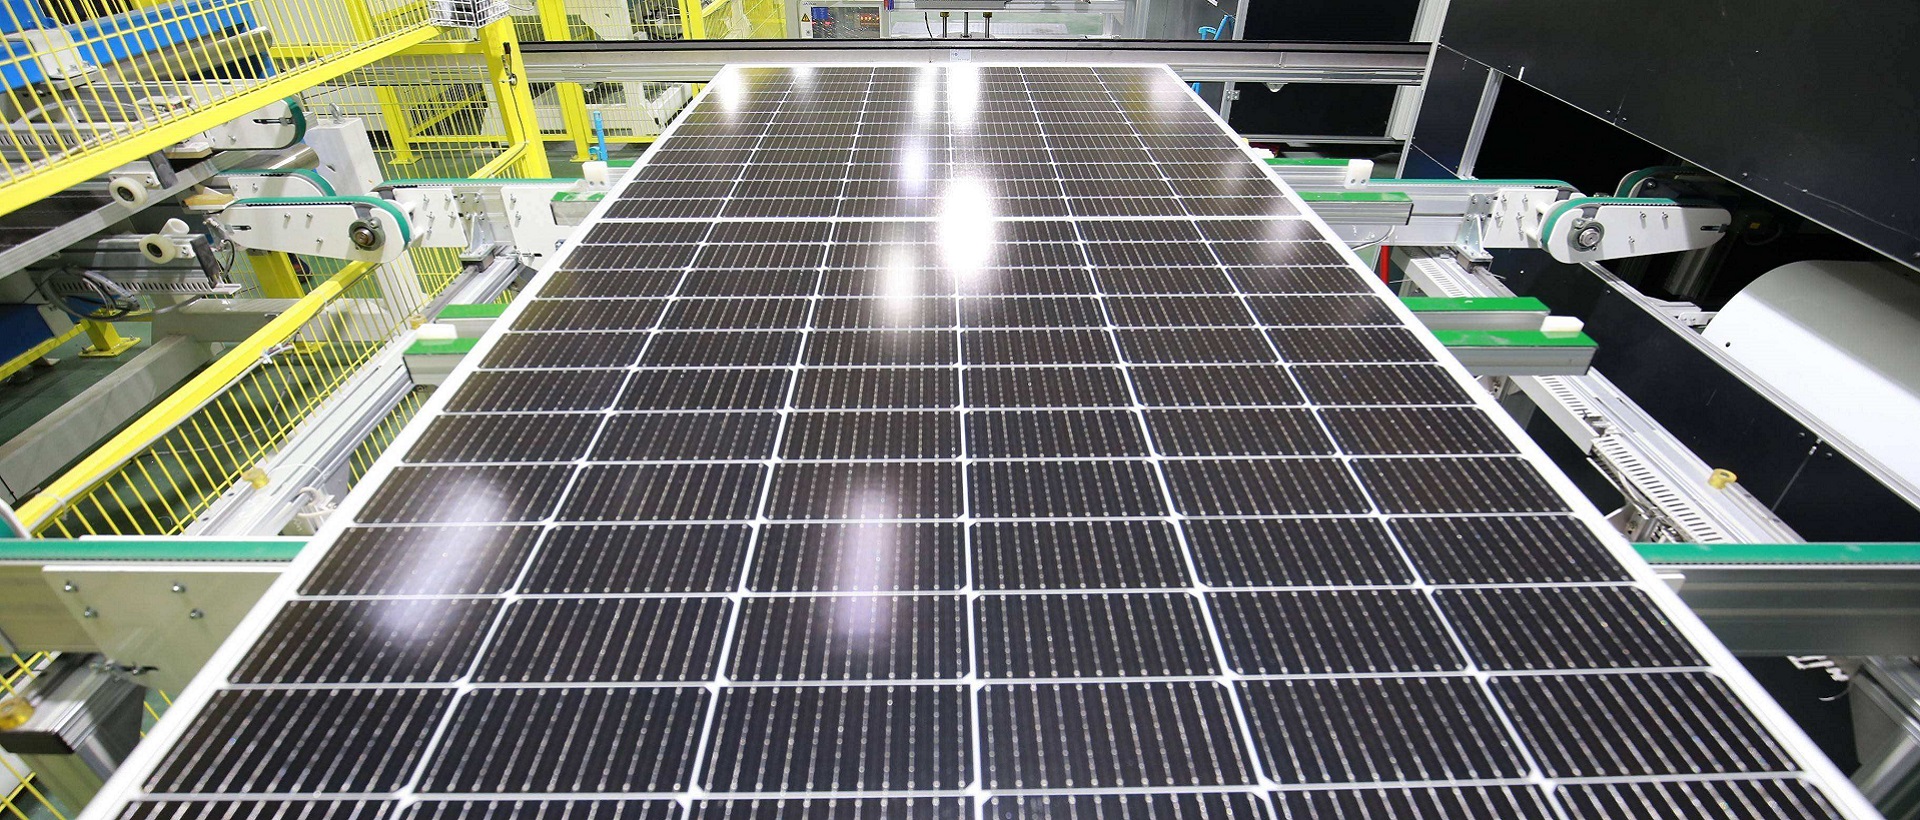 Henergy Solar Production Line 02